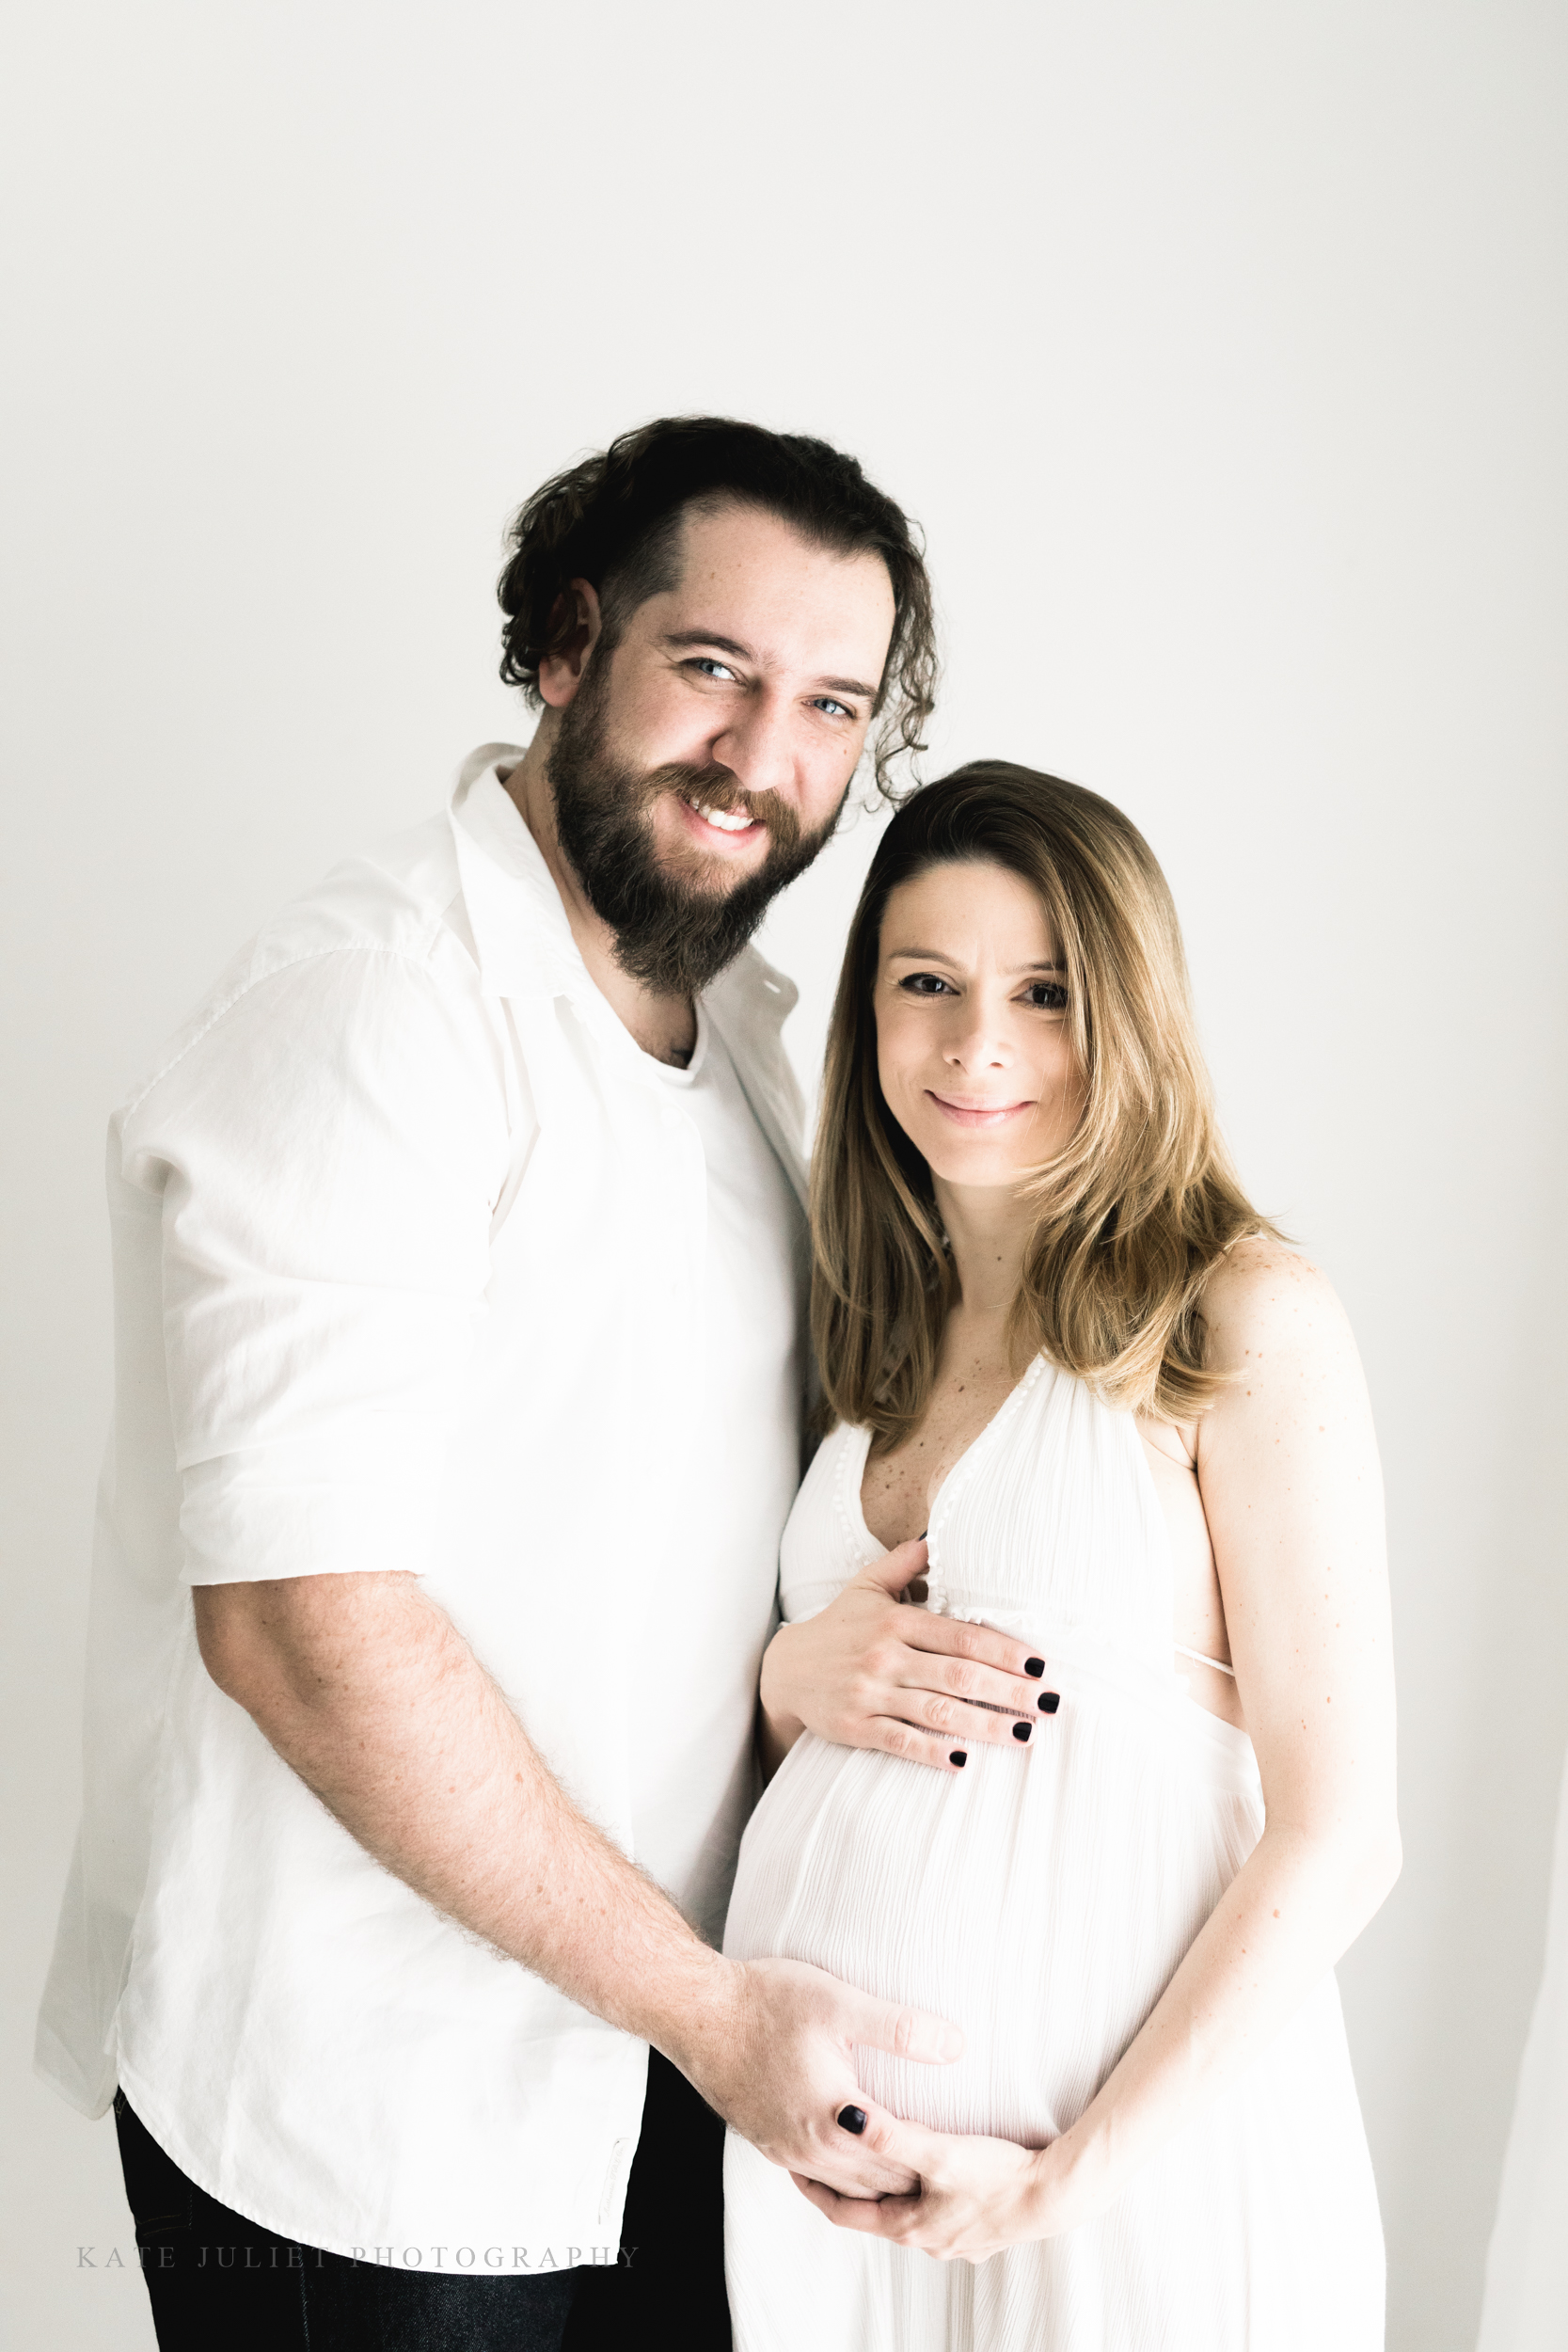 Arlington VA Pregnancy Photographer | Kate Juliet Photography